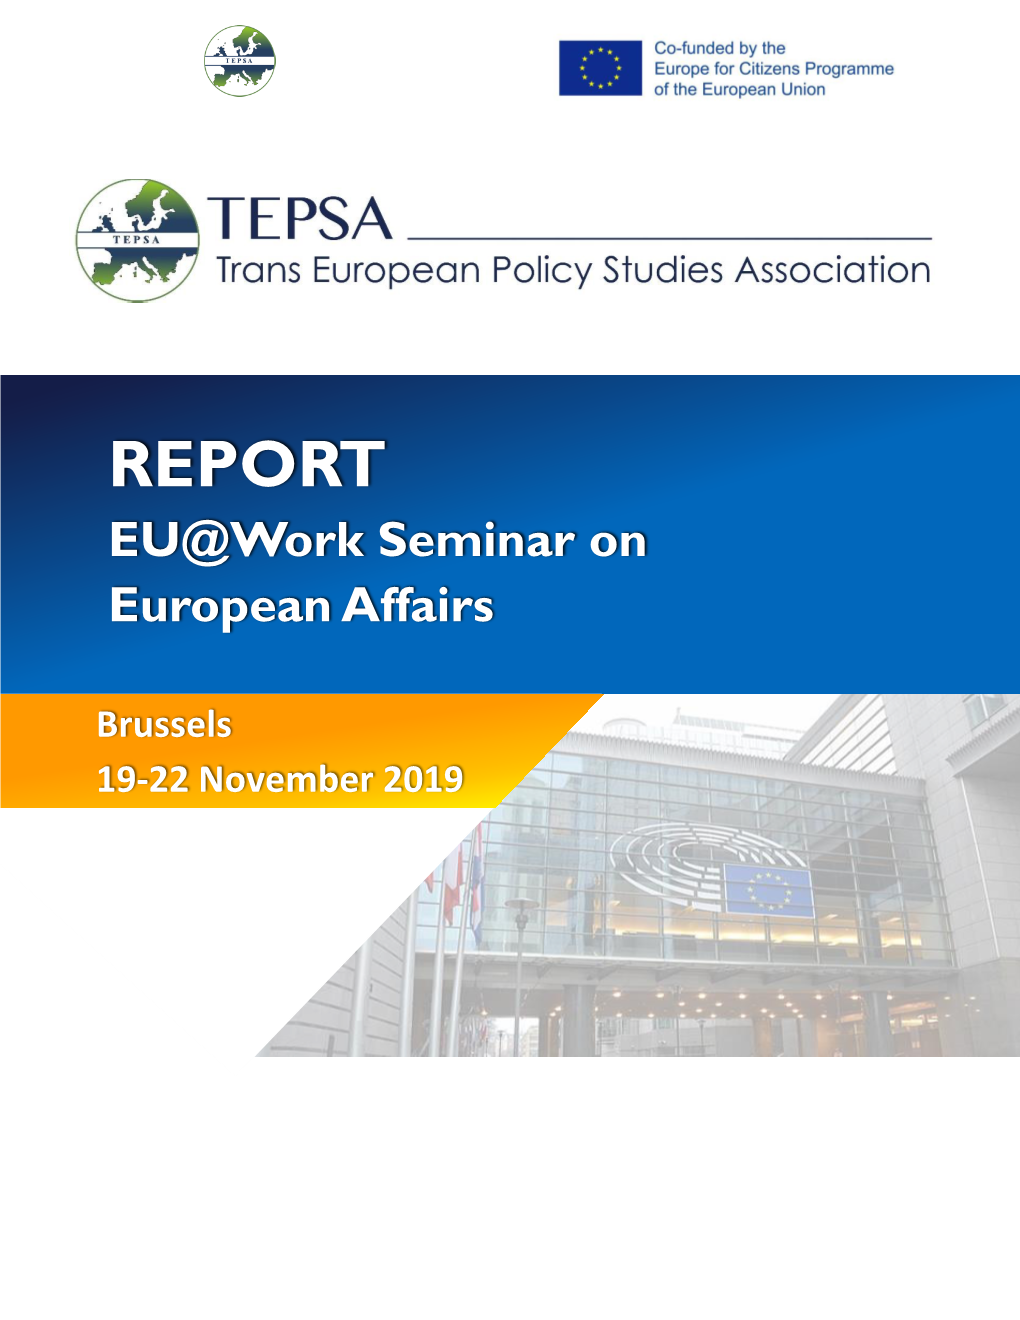 REPORT EU@Work Seminar on European Affairs